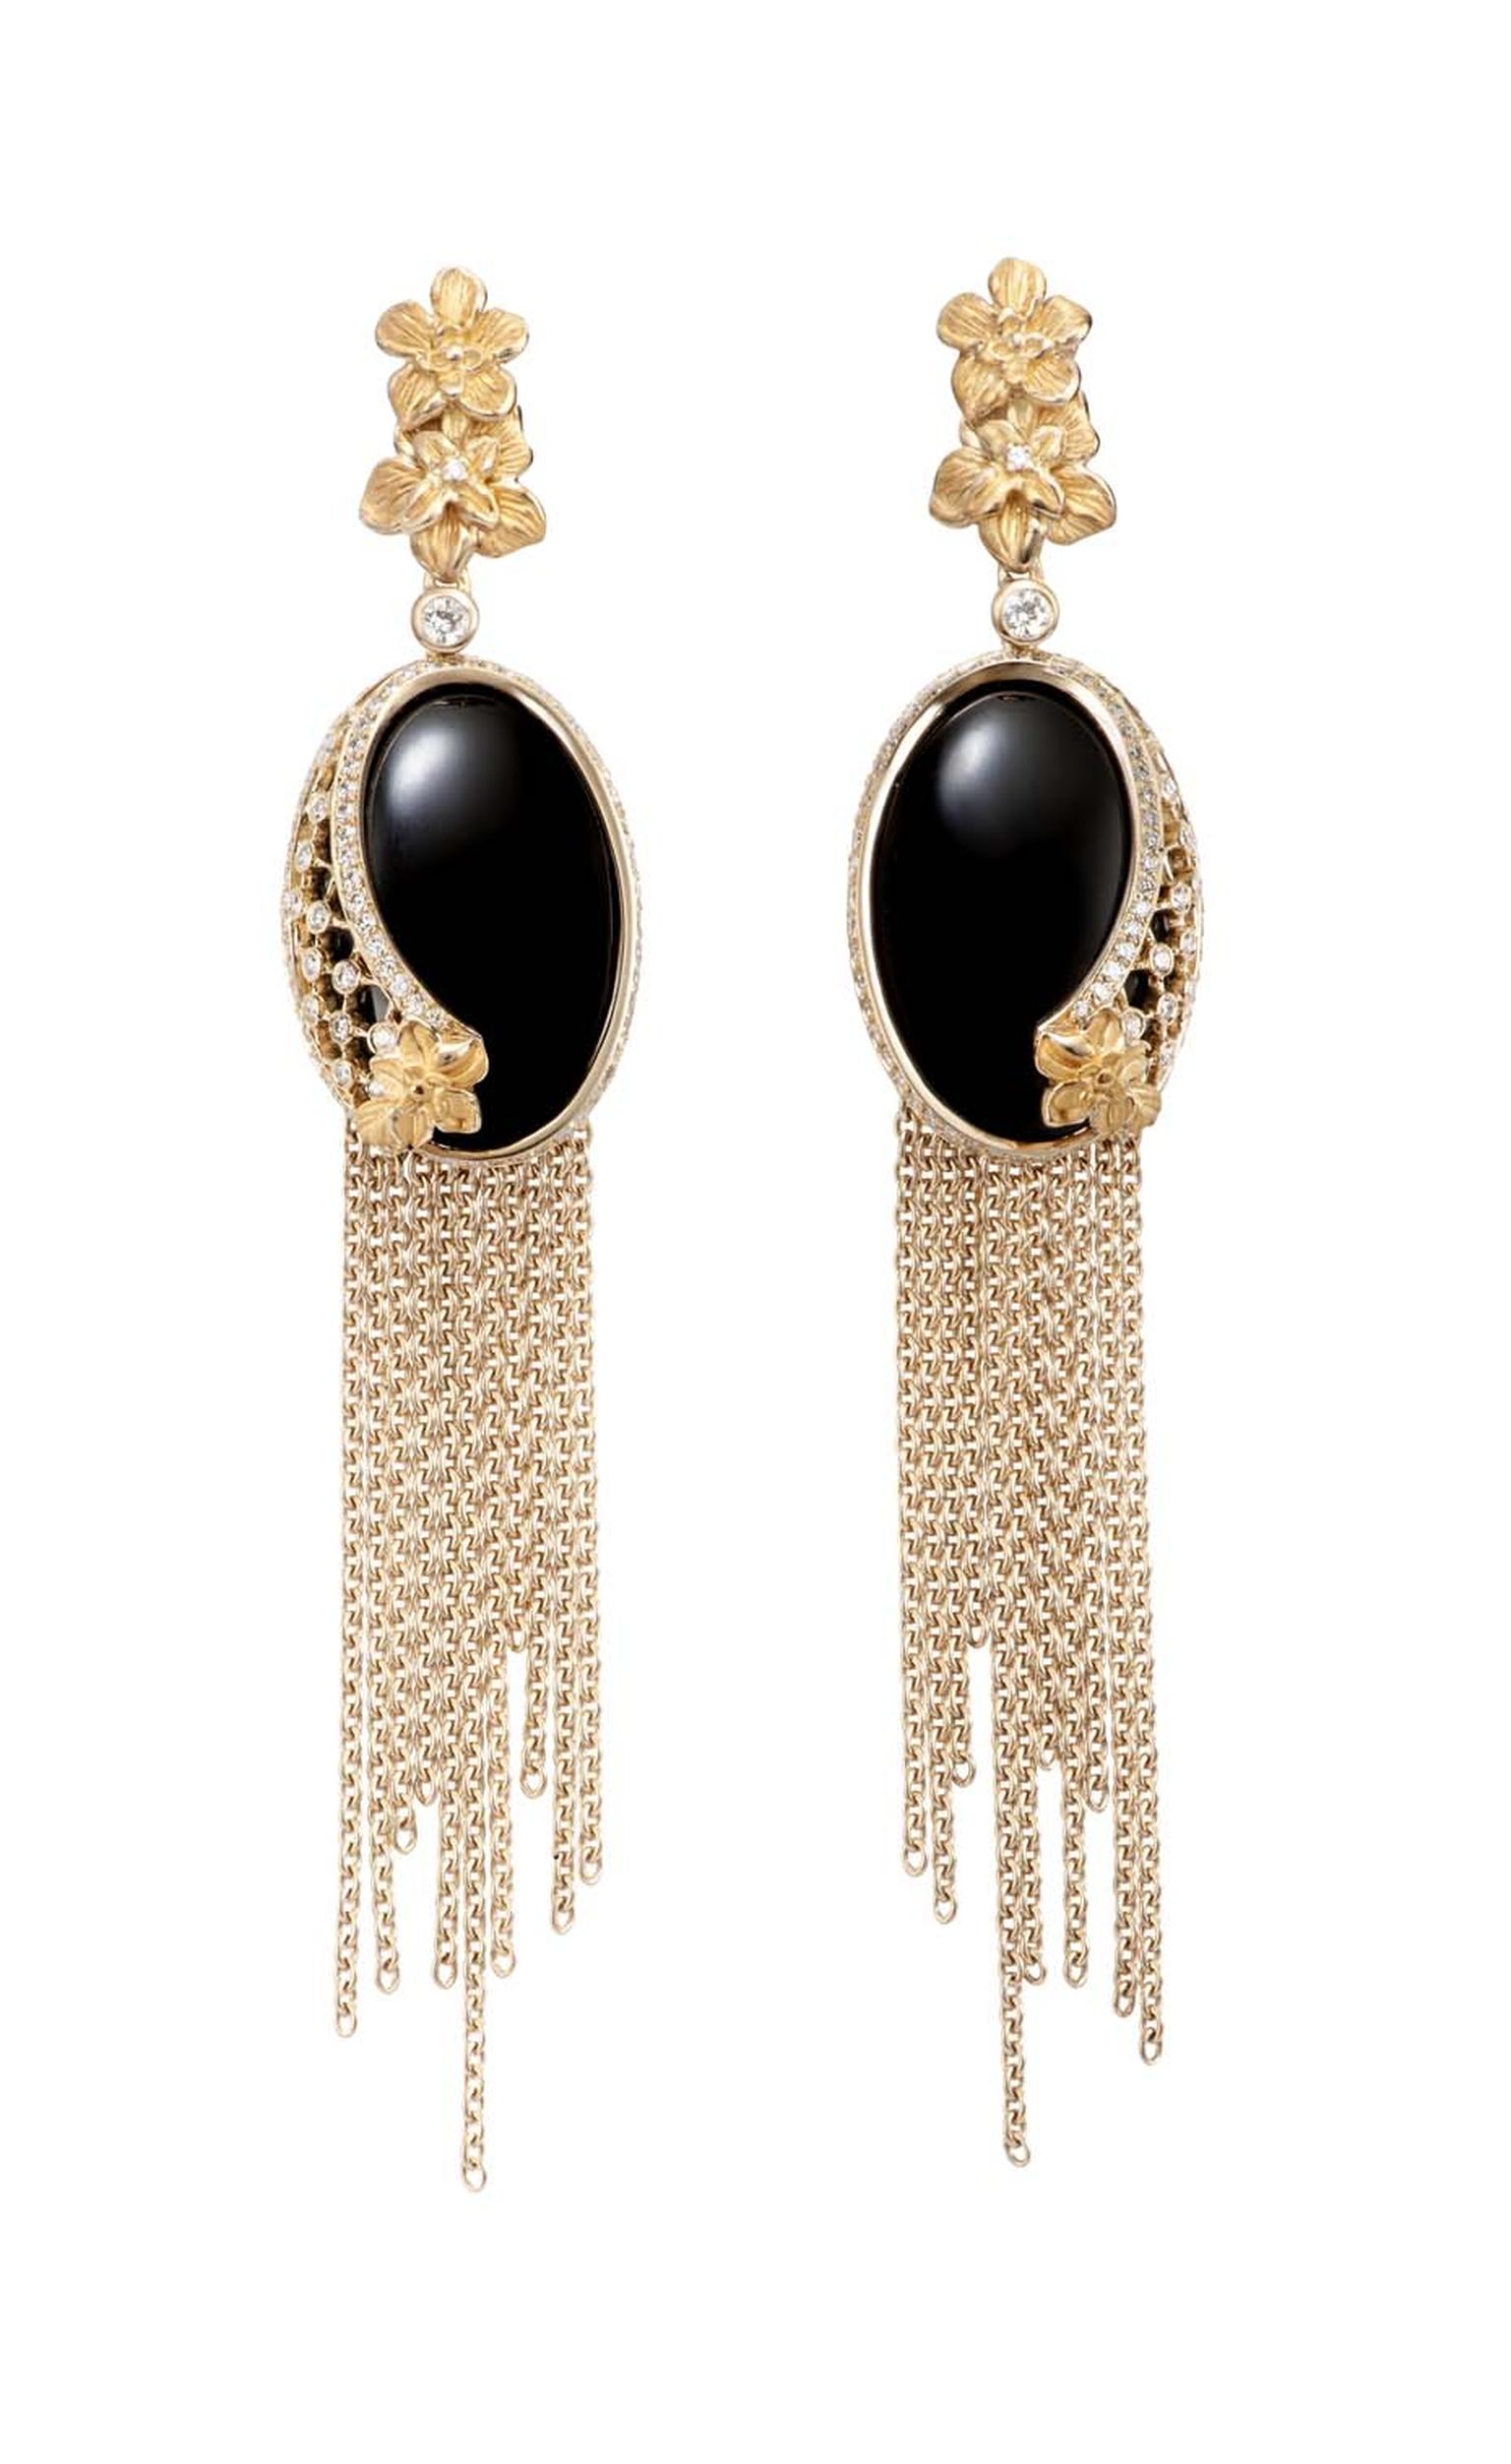 Met Gala 2015_Kate Beckinsale_Carrera y Carrera_Sierpes maxi earrings in yellow gold, onyx and diamonds.jpg